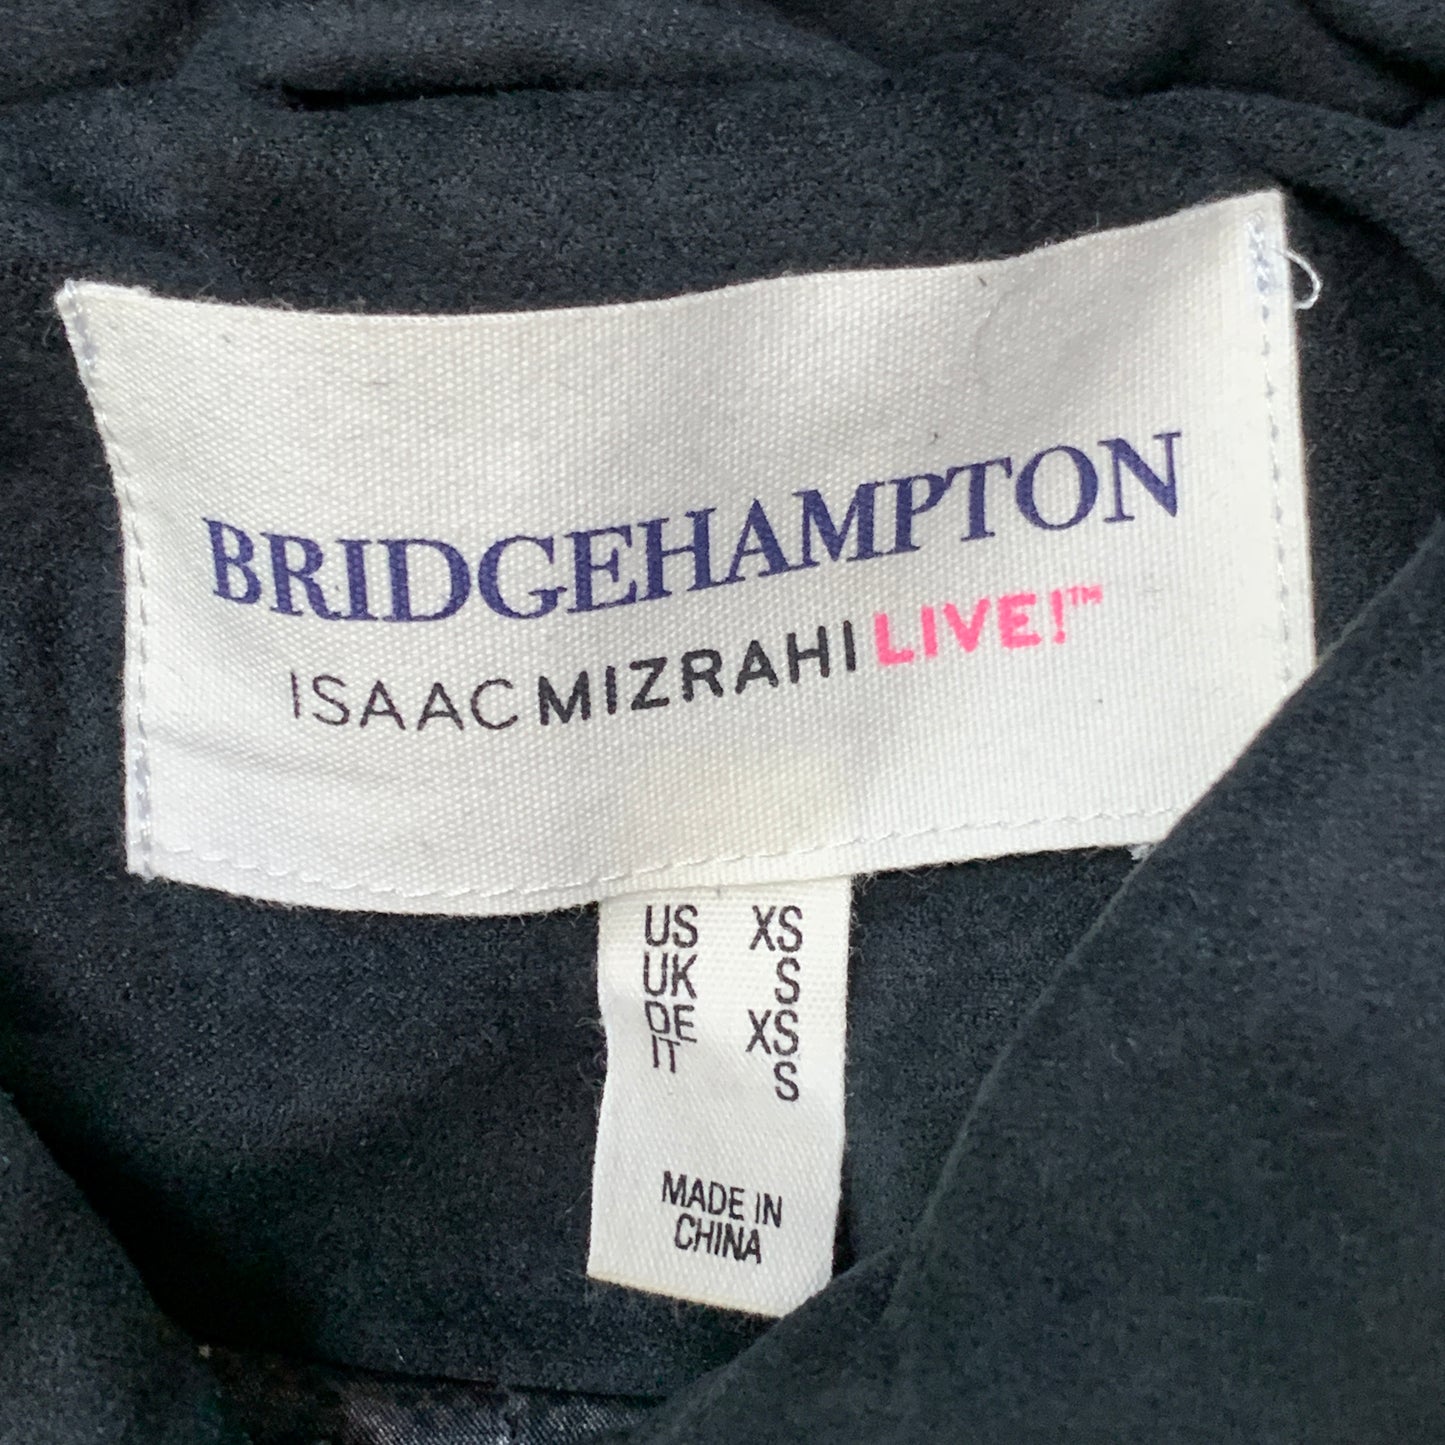 BRIDGE HAMPTON ISSAC MIZRAHI LIVE! Faux Suede Coat Full Snap Up Black Size XS